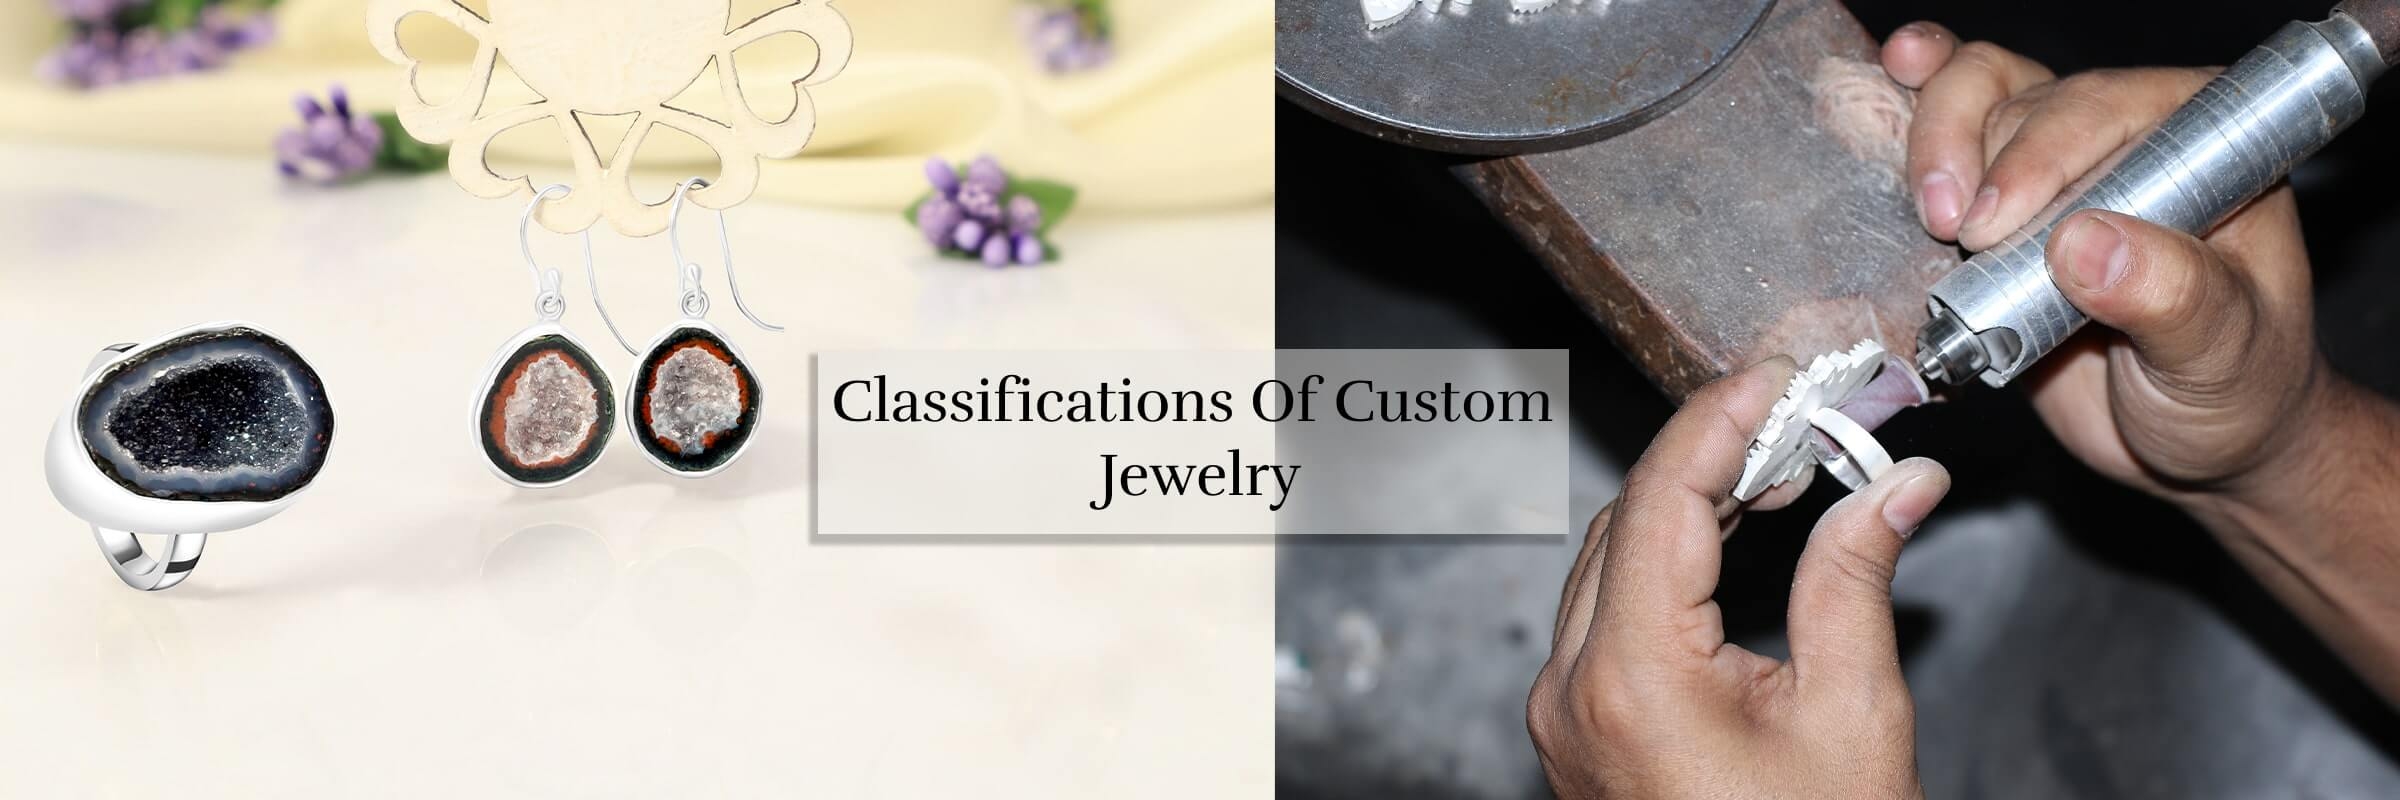 Popular Types Of Custom Jewelry: